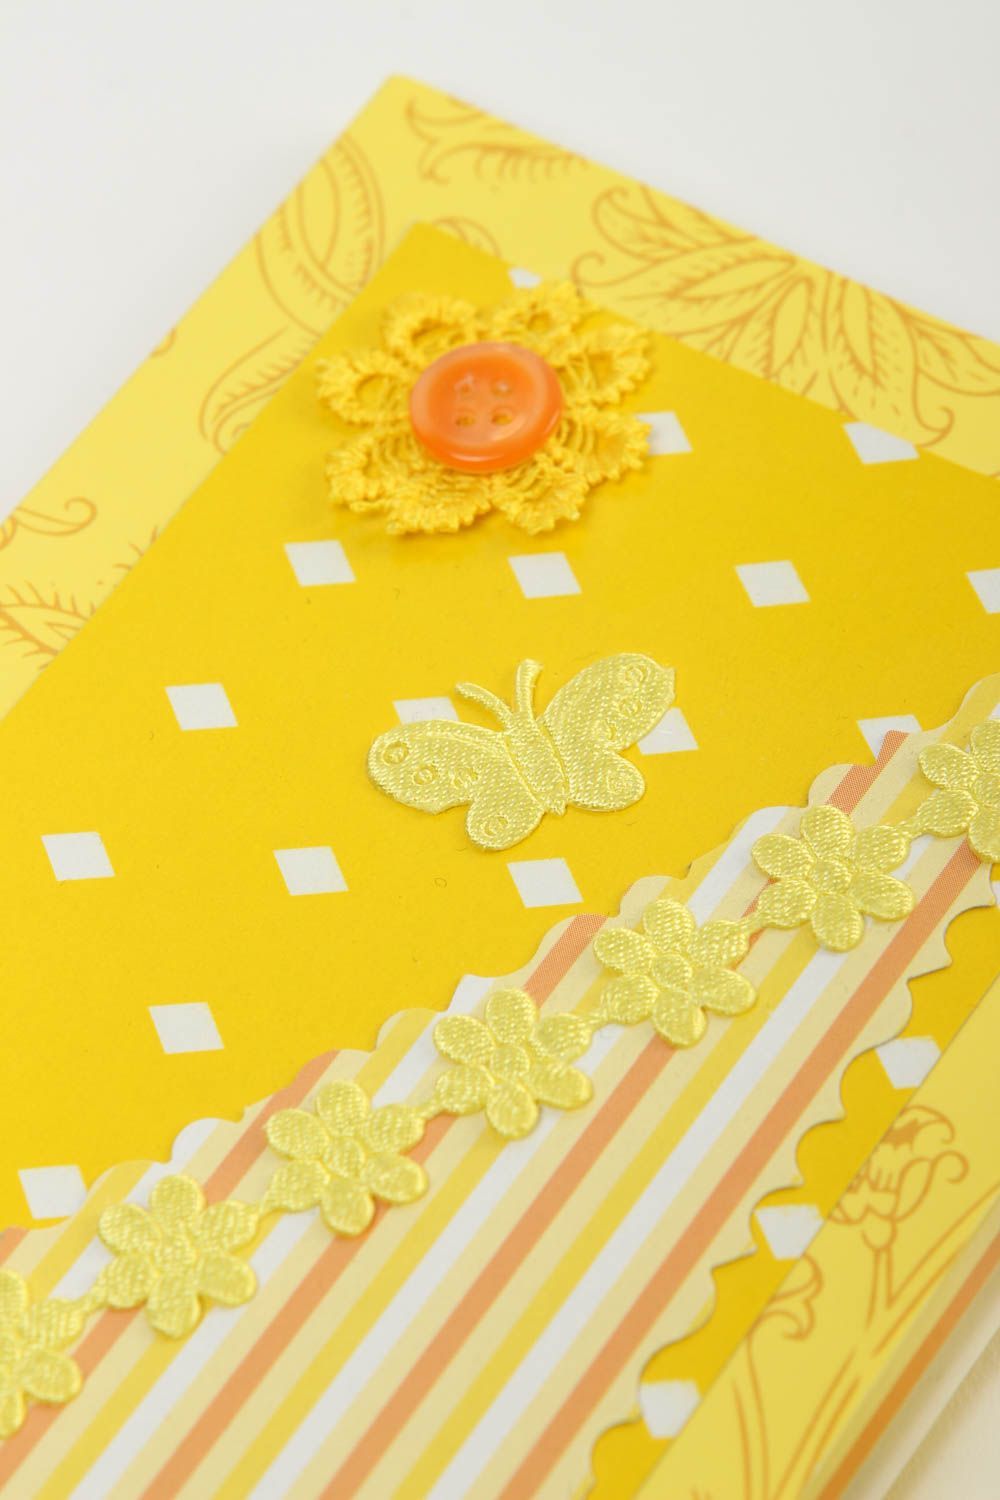 Handmade schöne Grusskarten Scrapbook Karten Papier Karten rechteckig gelb foto 2